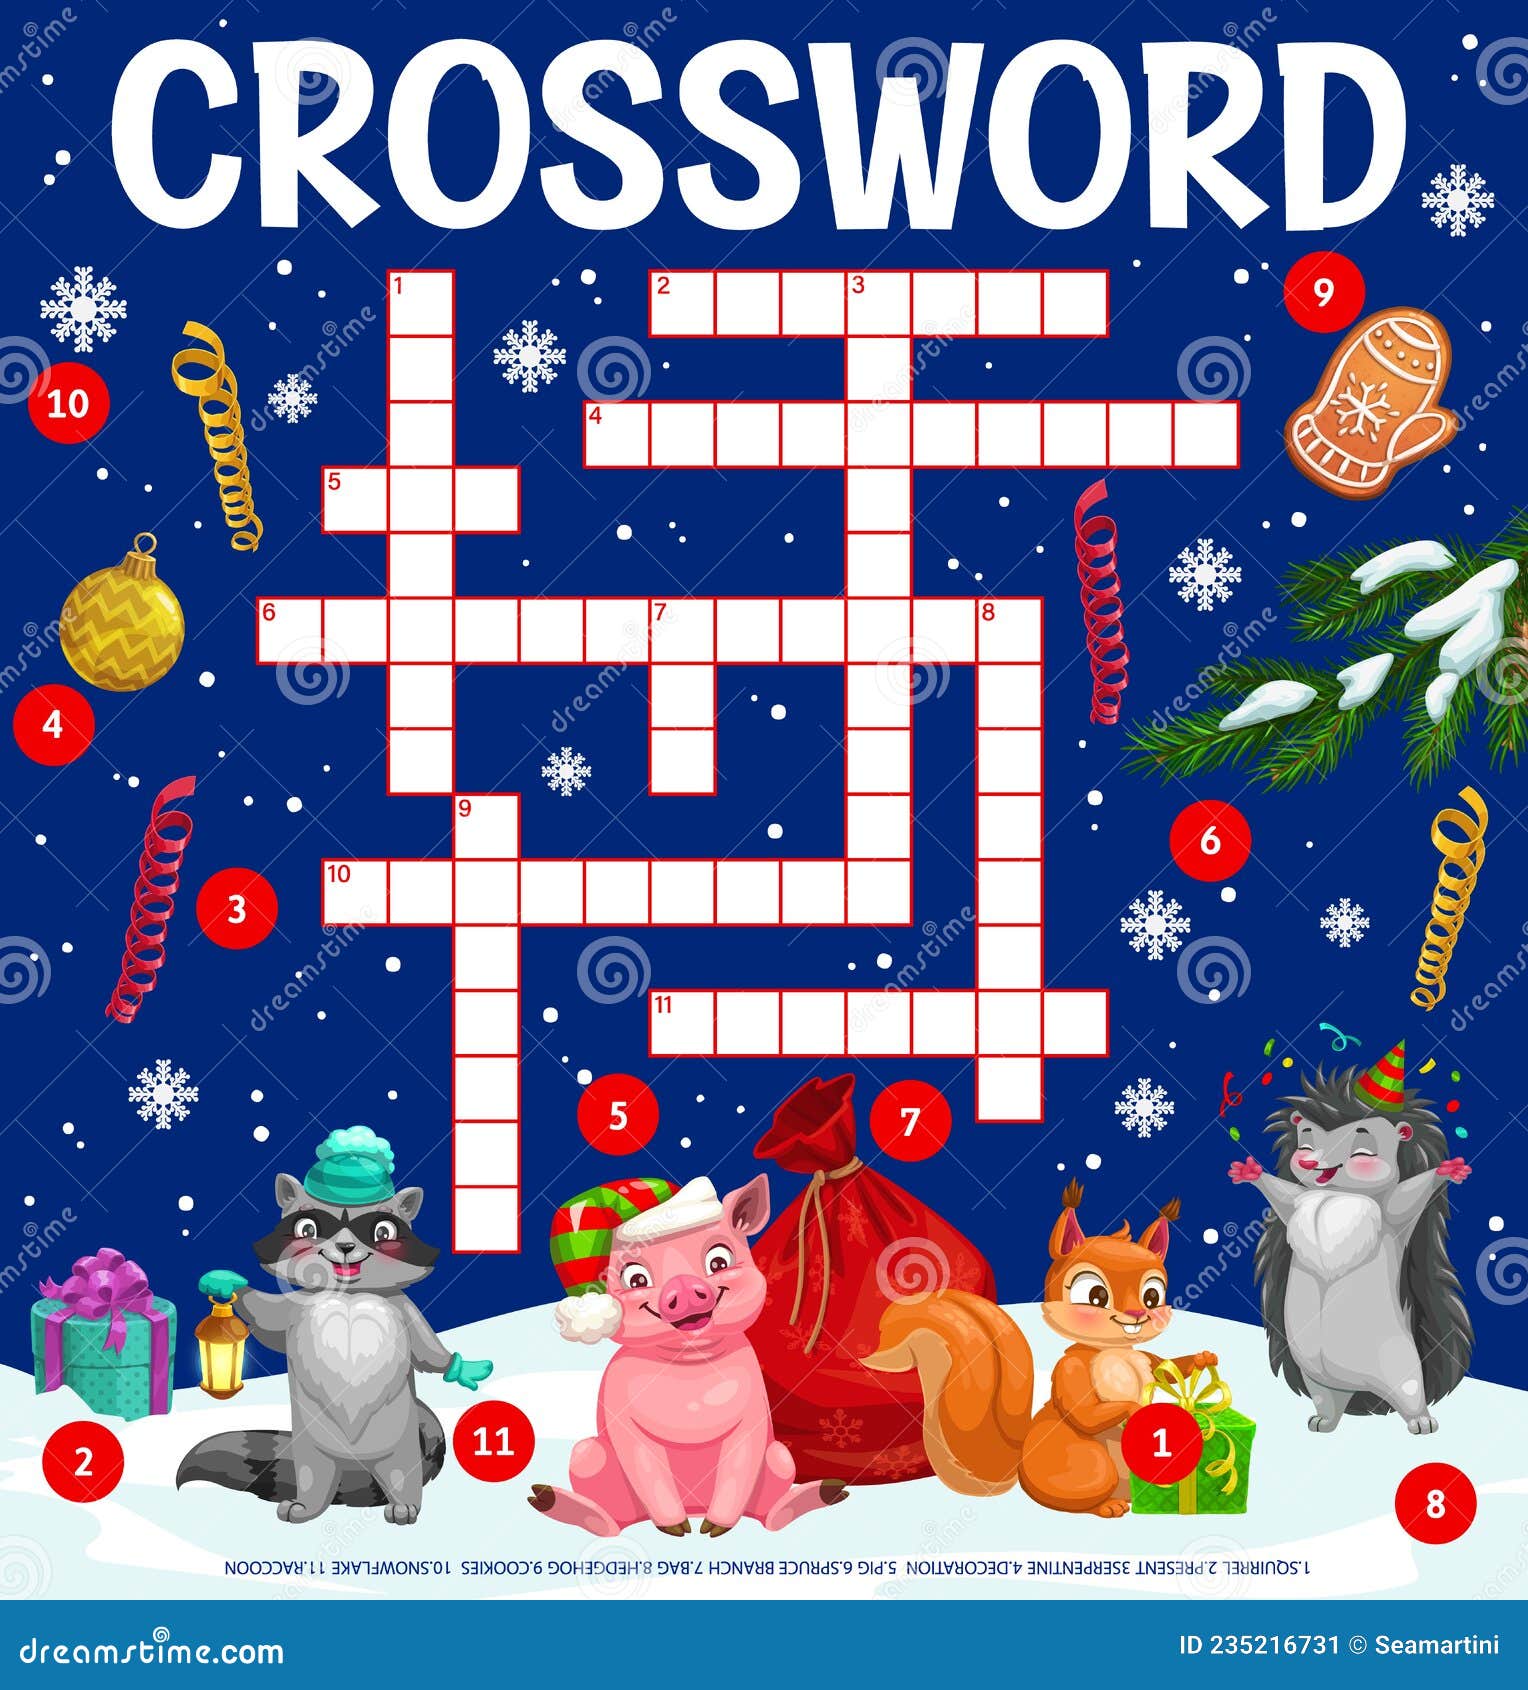 Christmas Kids Crossword Grid Worksheet, Find Word Stock Vector - Illustration of decoration, 235216731